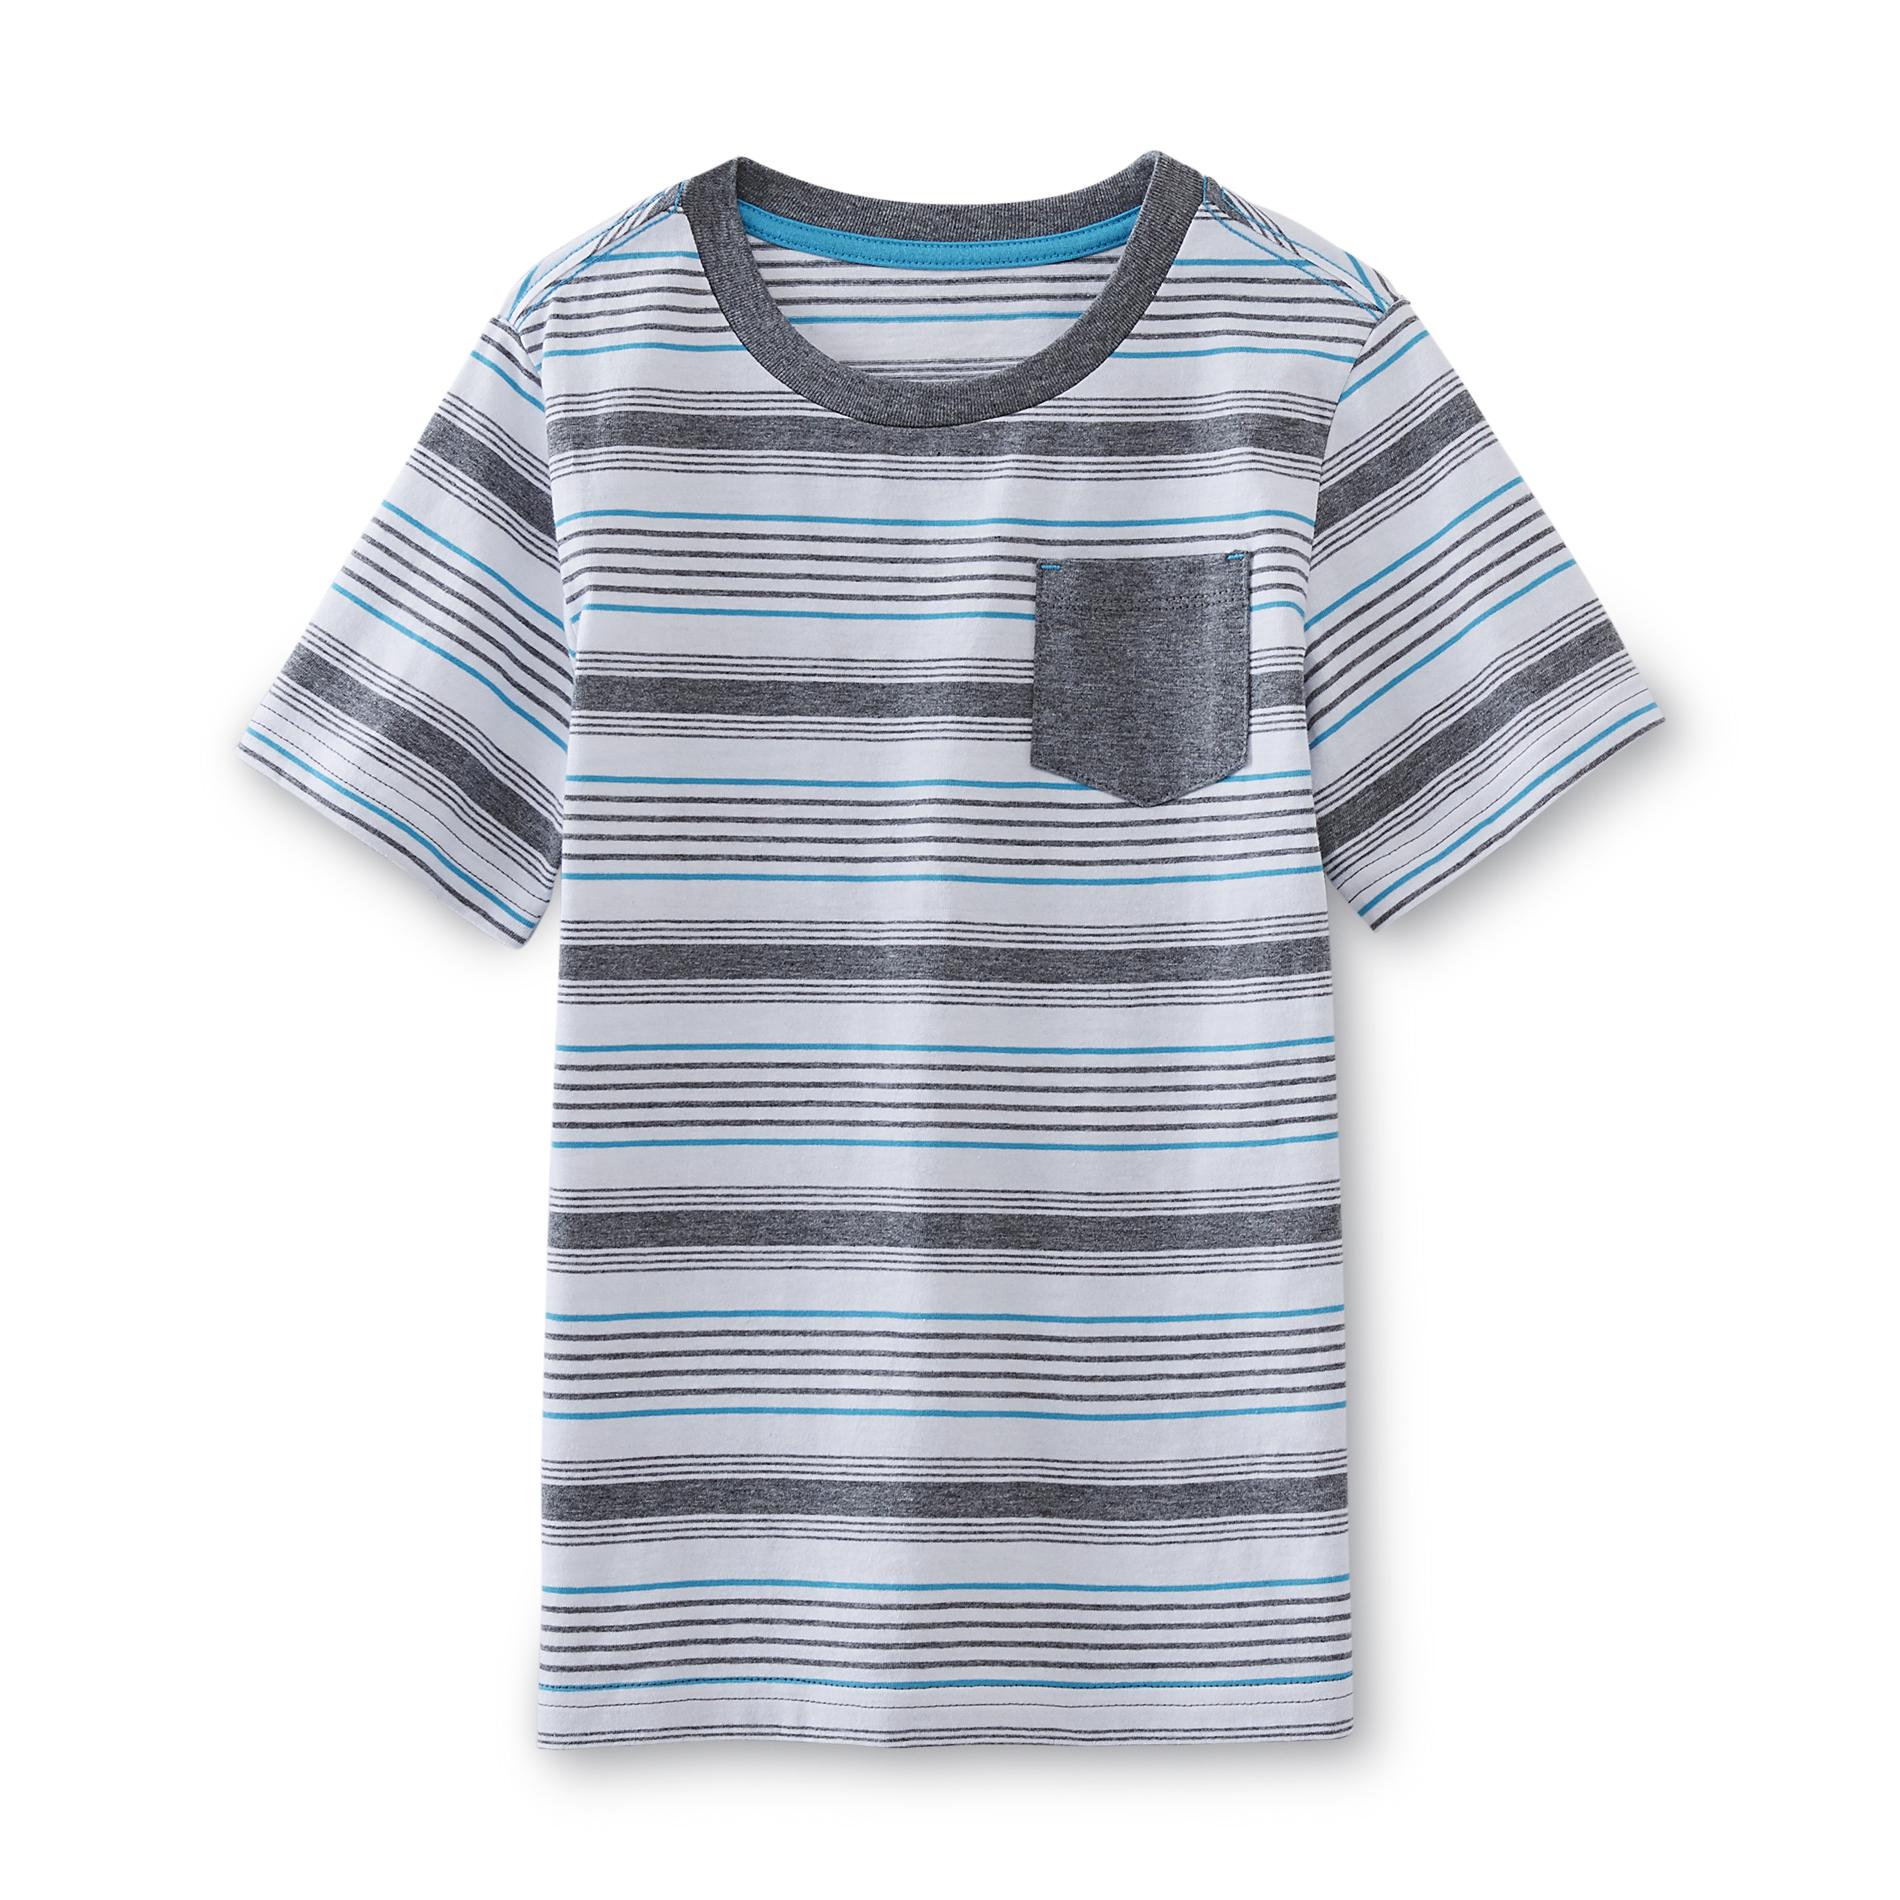 Boy's Jersey Knit T-Shirt - Striped